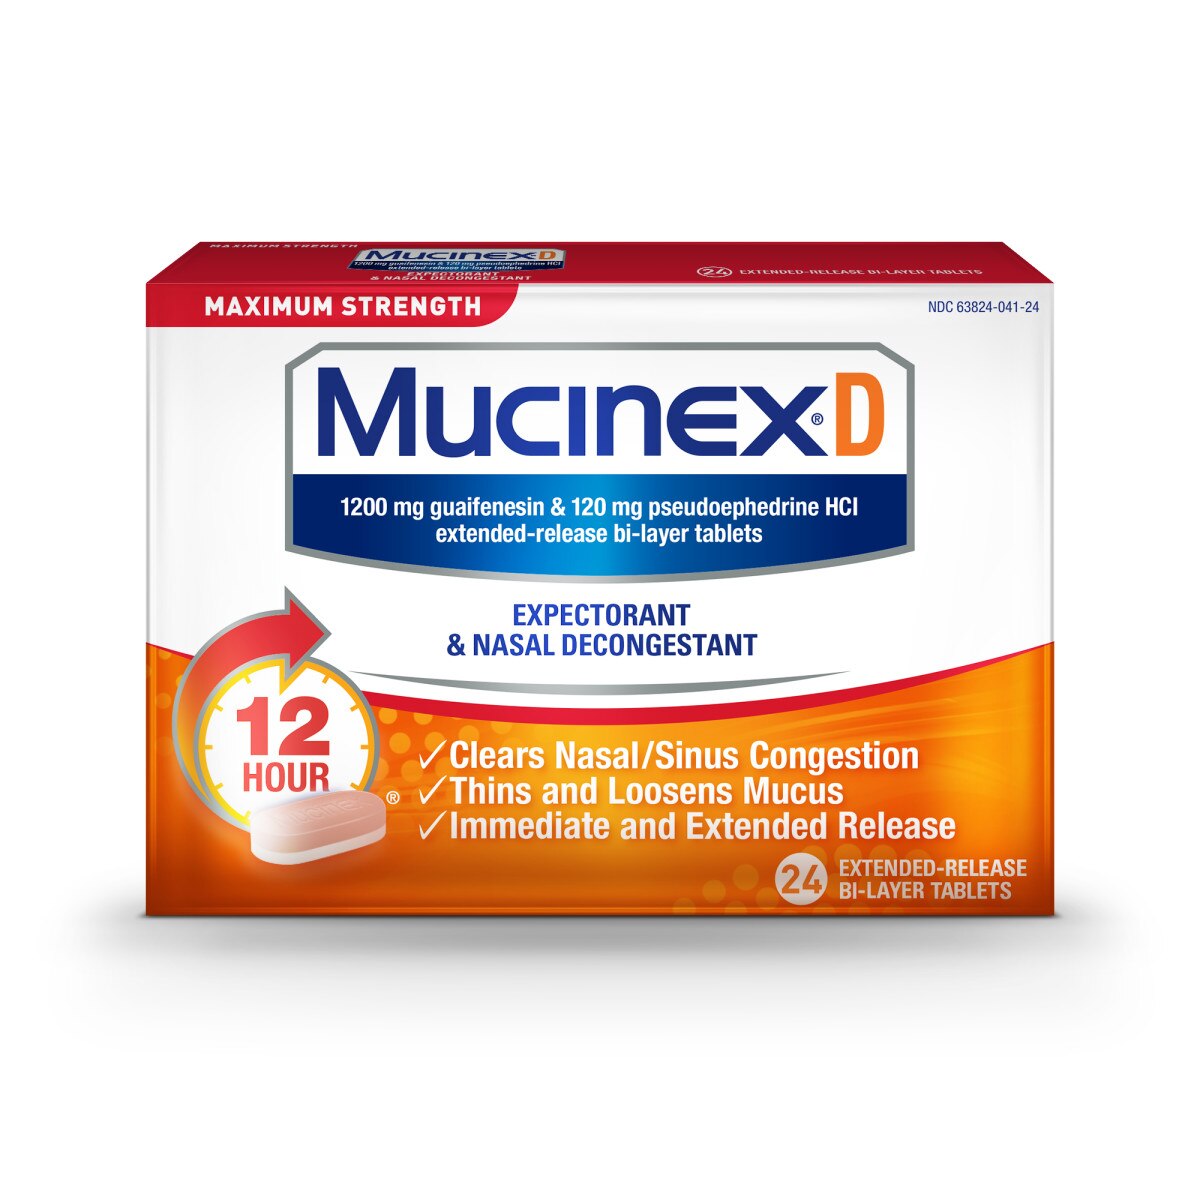 Mucinex D Maximum Strength Expectorant and Nasal Decongestant Tablets, 24 CT